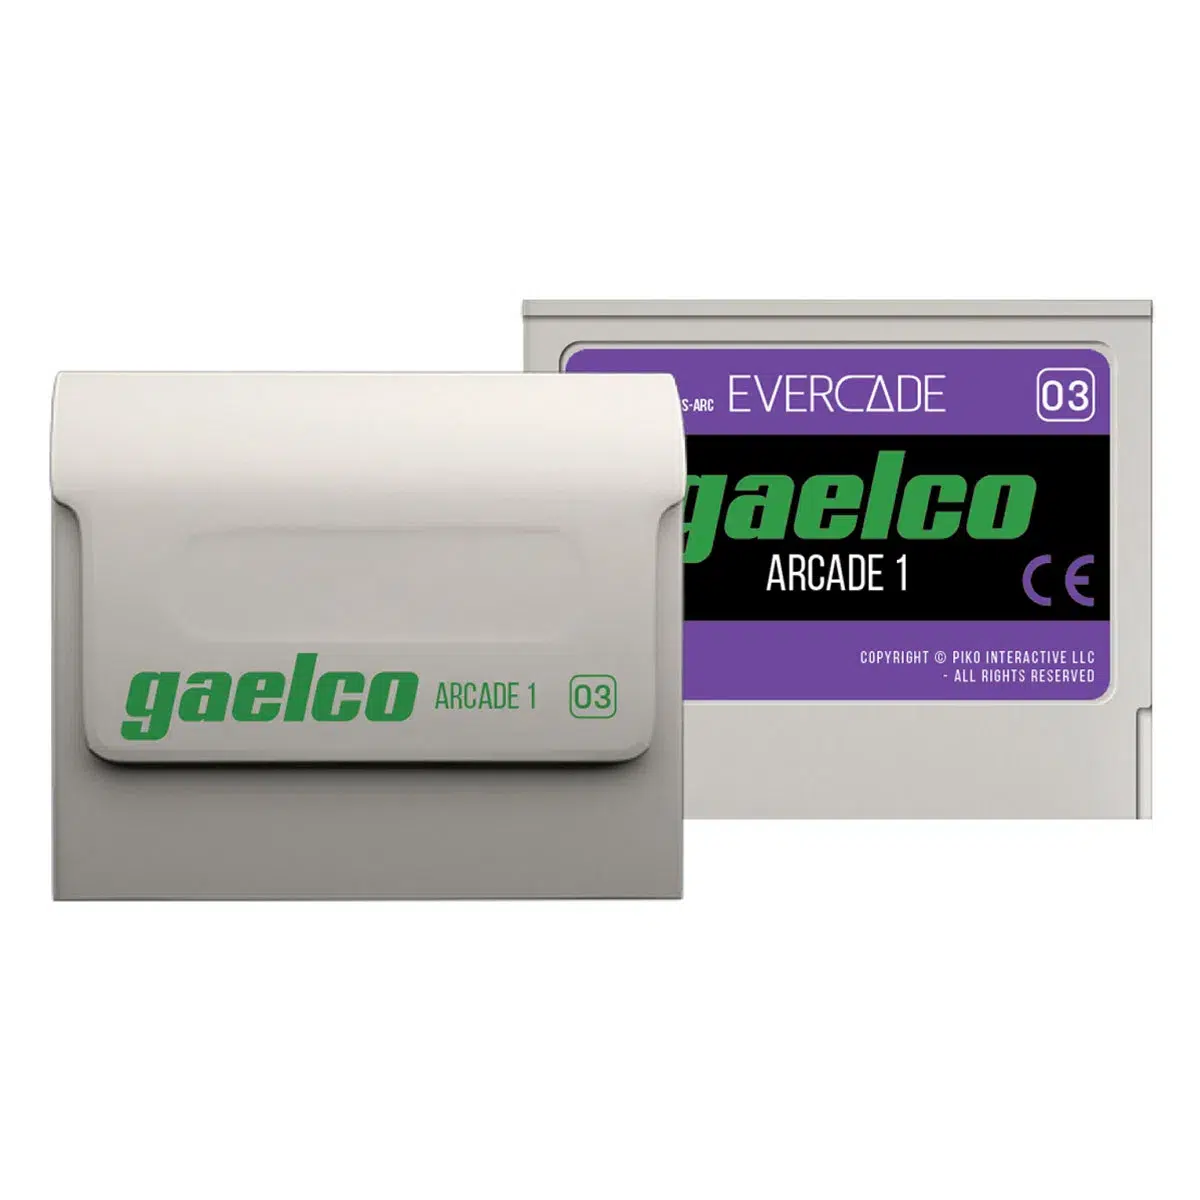 Blaze Evercade Gaelco Arcade Cartridge 1 Image 2